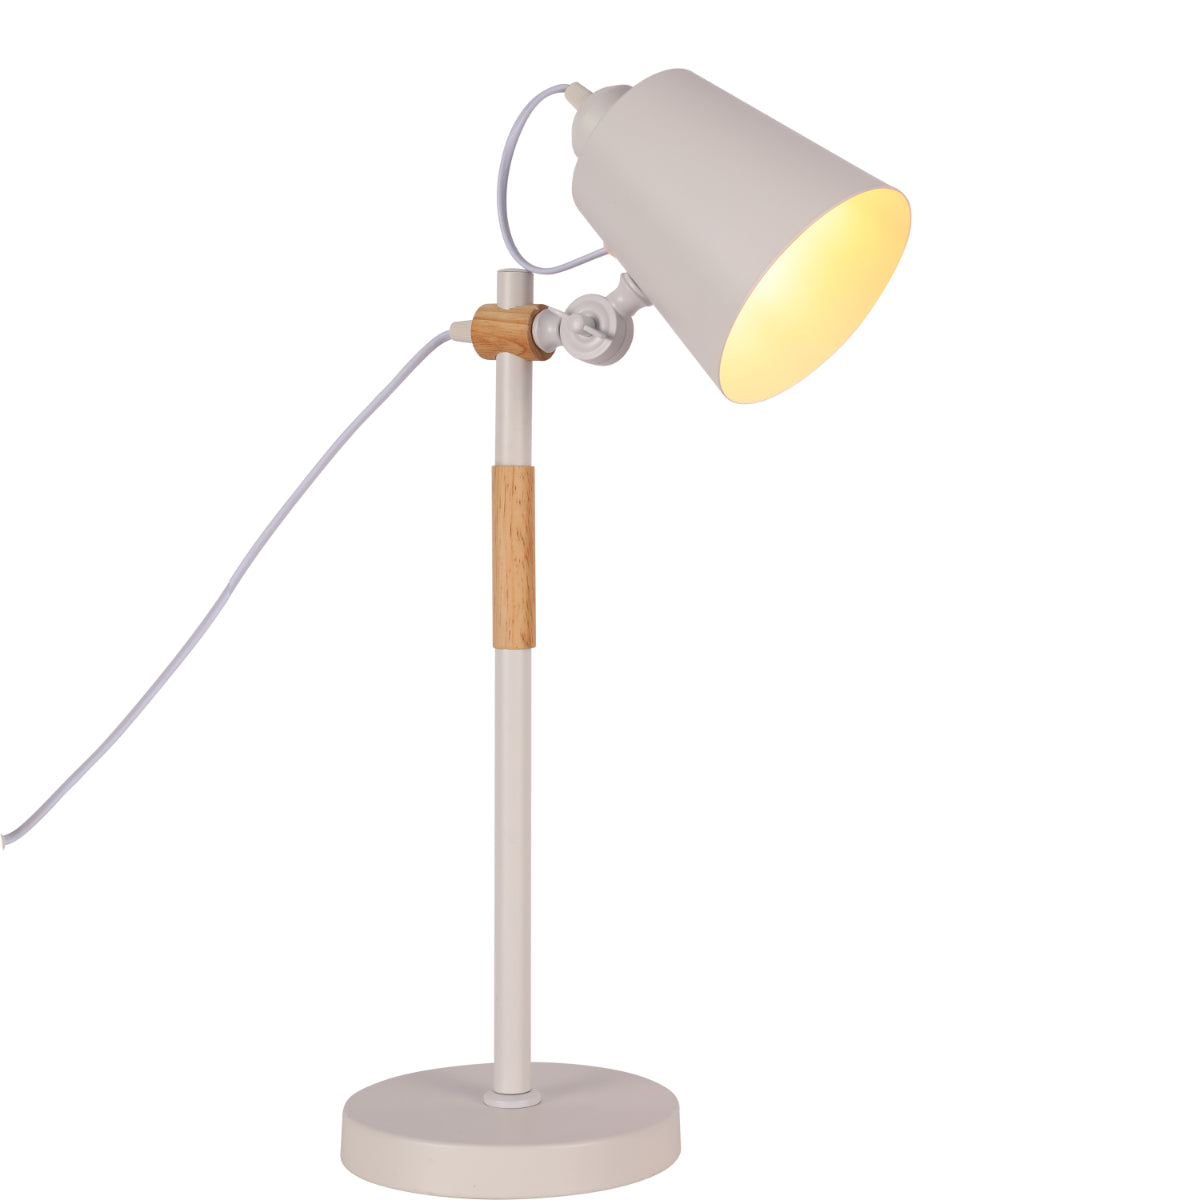 Main image of Scandi Sleek E27 Desk Lamp 130-03704